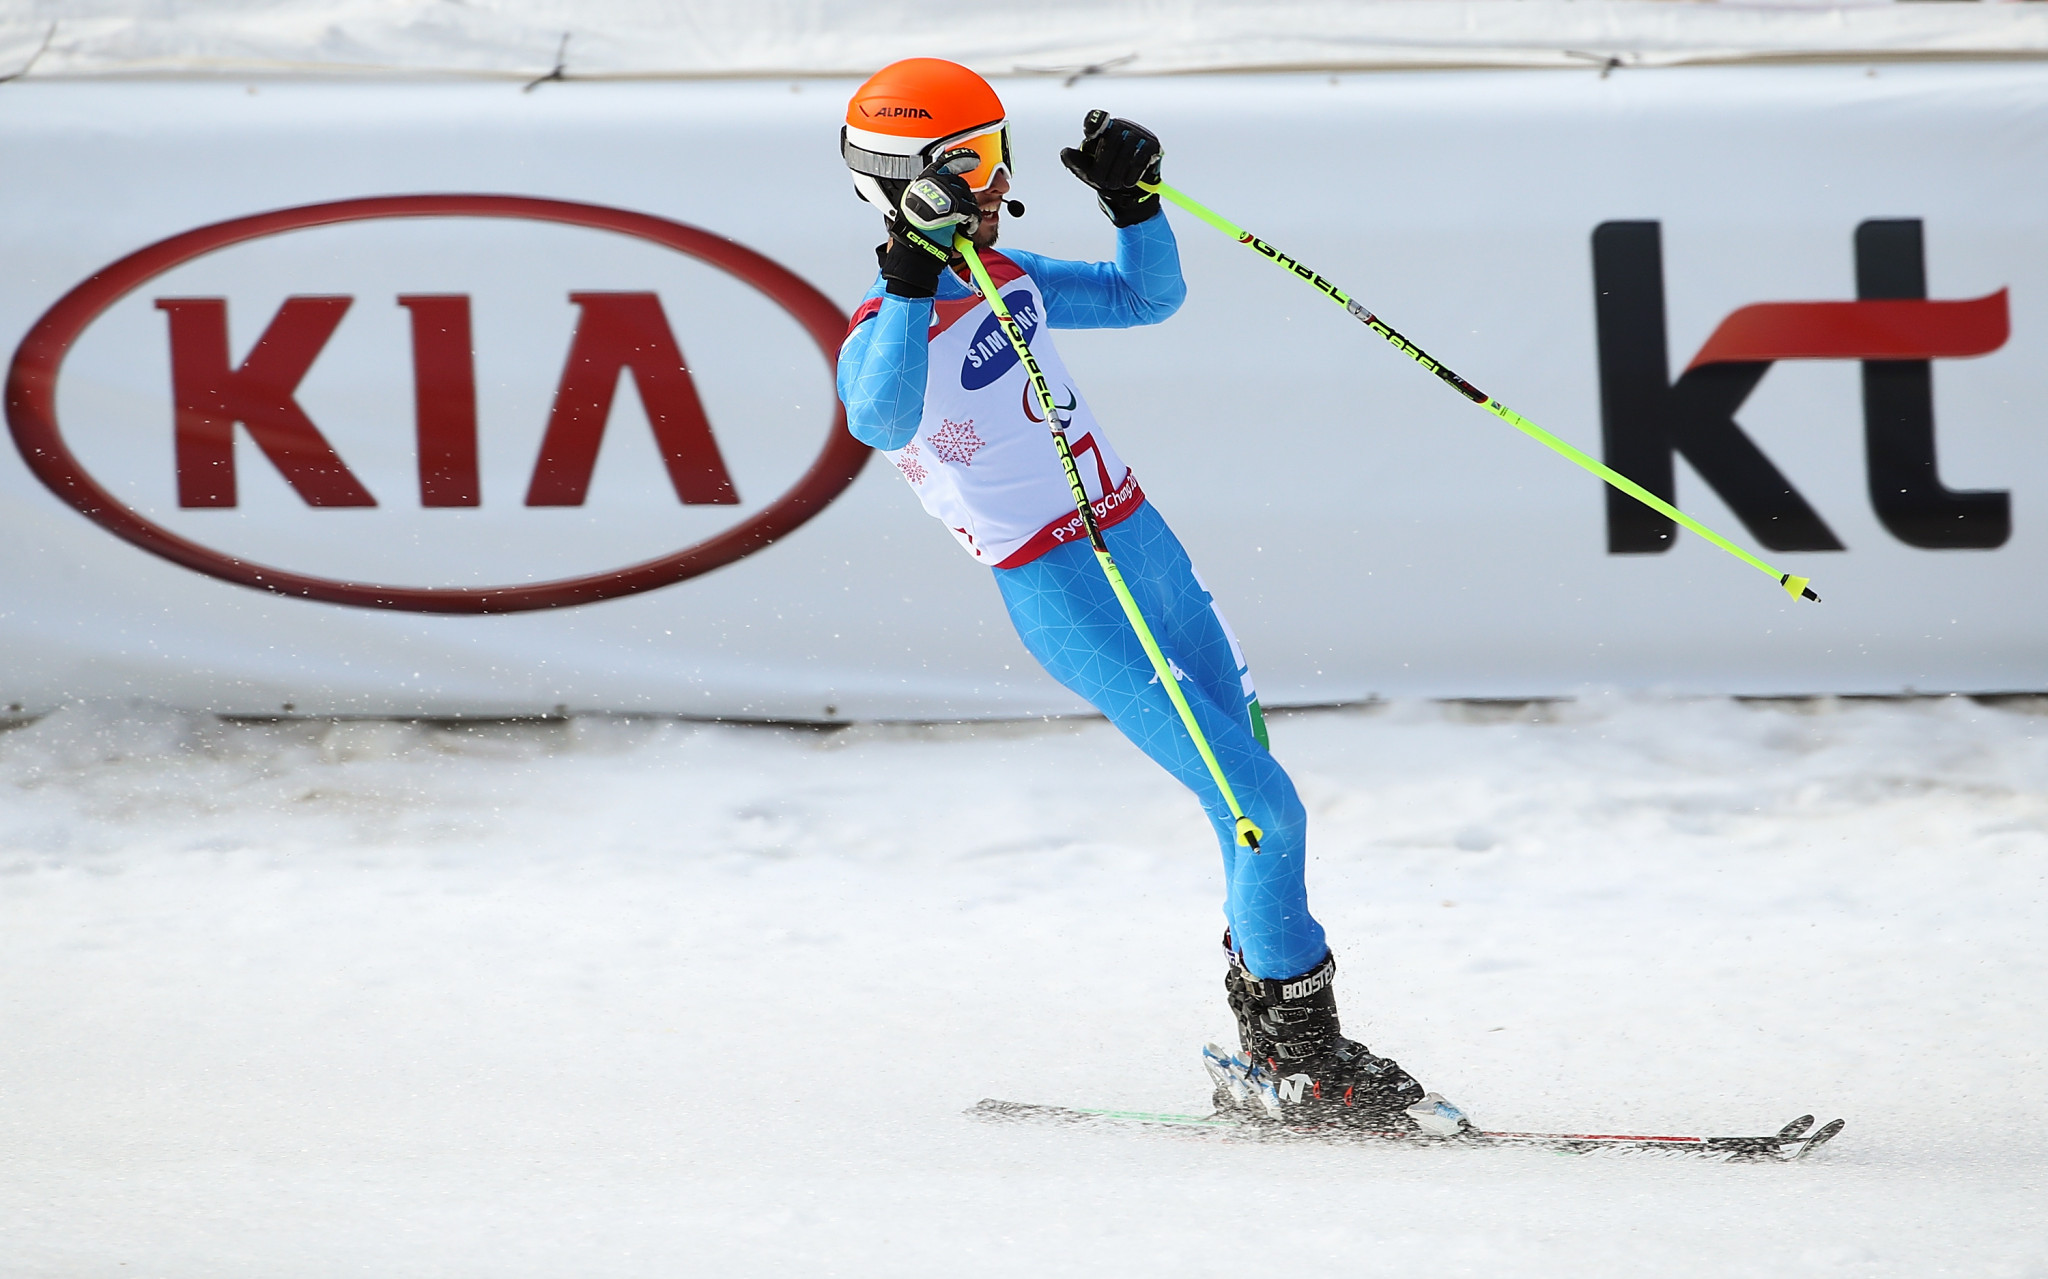 Bertagnolli enjoys home victory at World Para Alpine Skiing World Cup